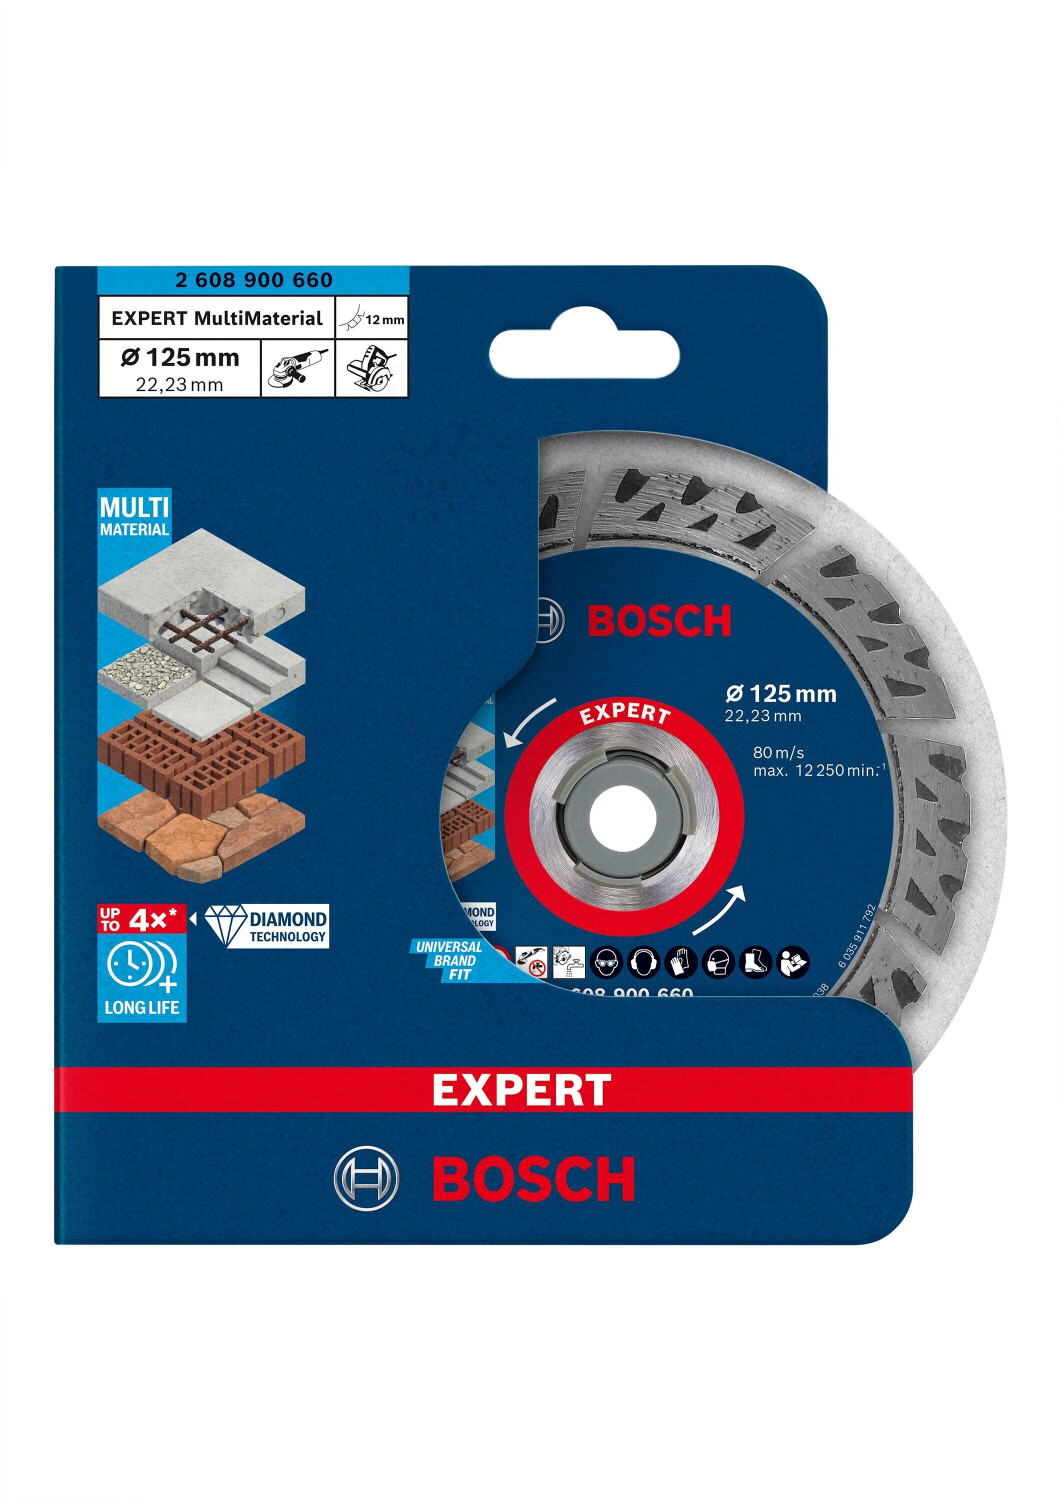 Preisvergleich MultiMaterial Bosch x 125 bei Expert (2608900660) mm € 22,23 35,40 ab x 2,2 Accessories |